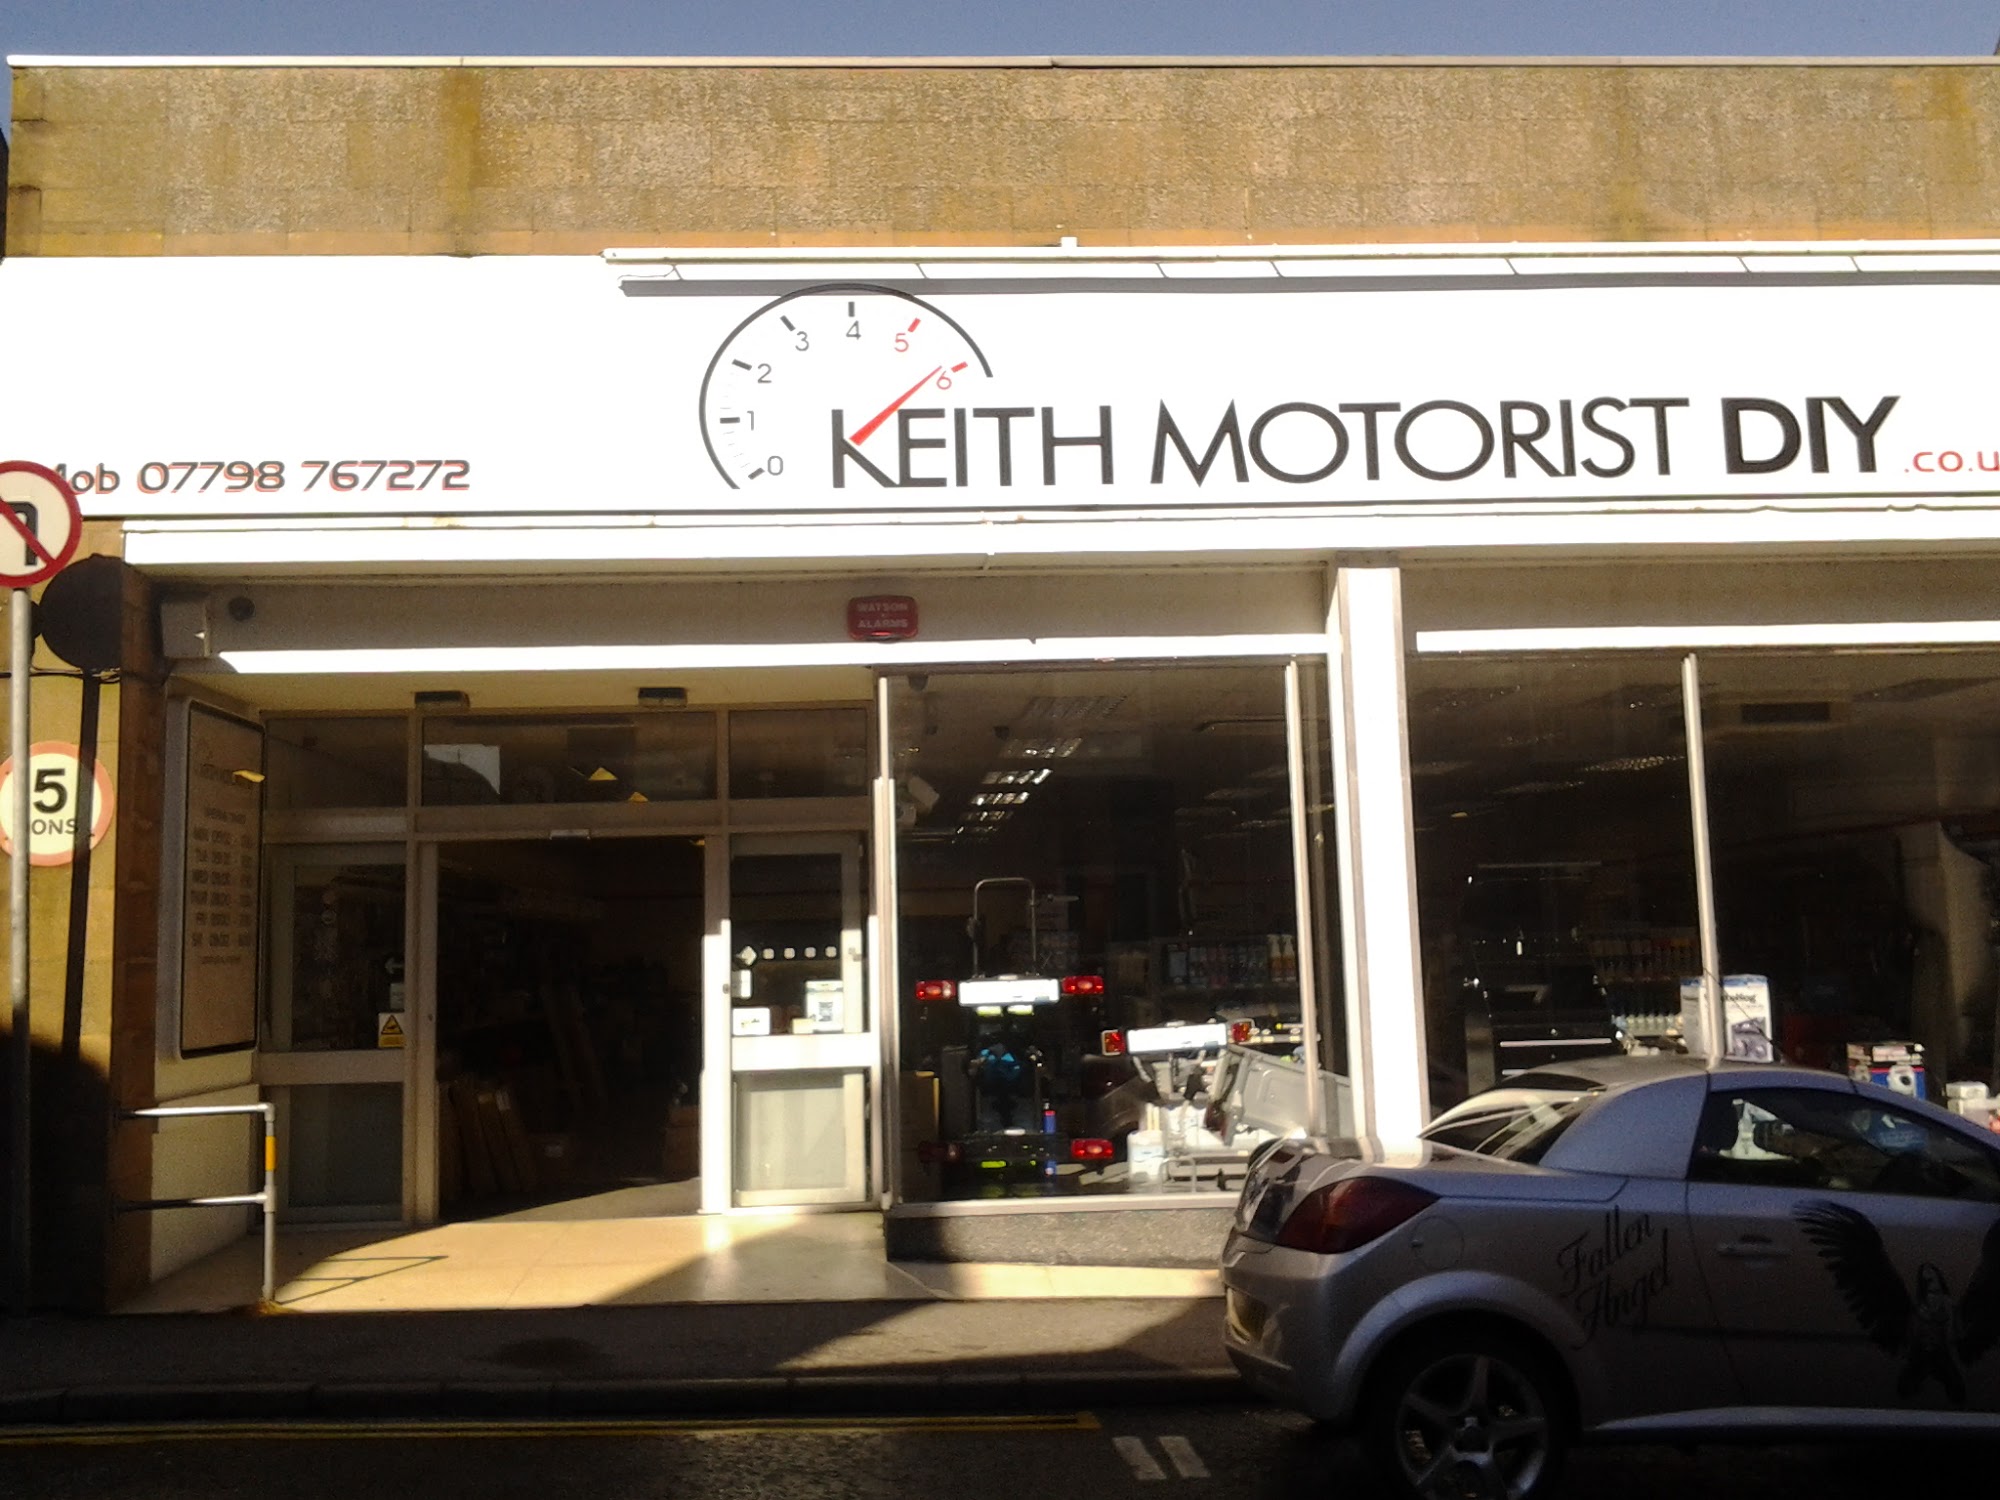 Keith Motorist DIY